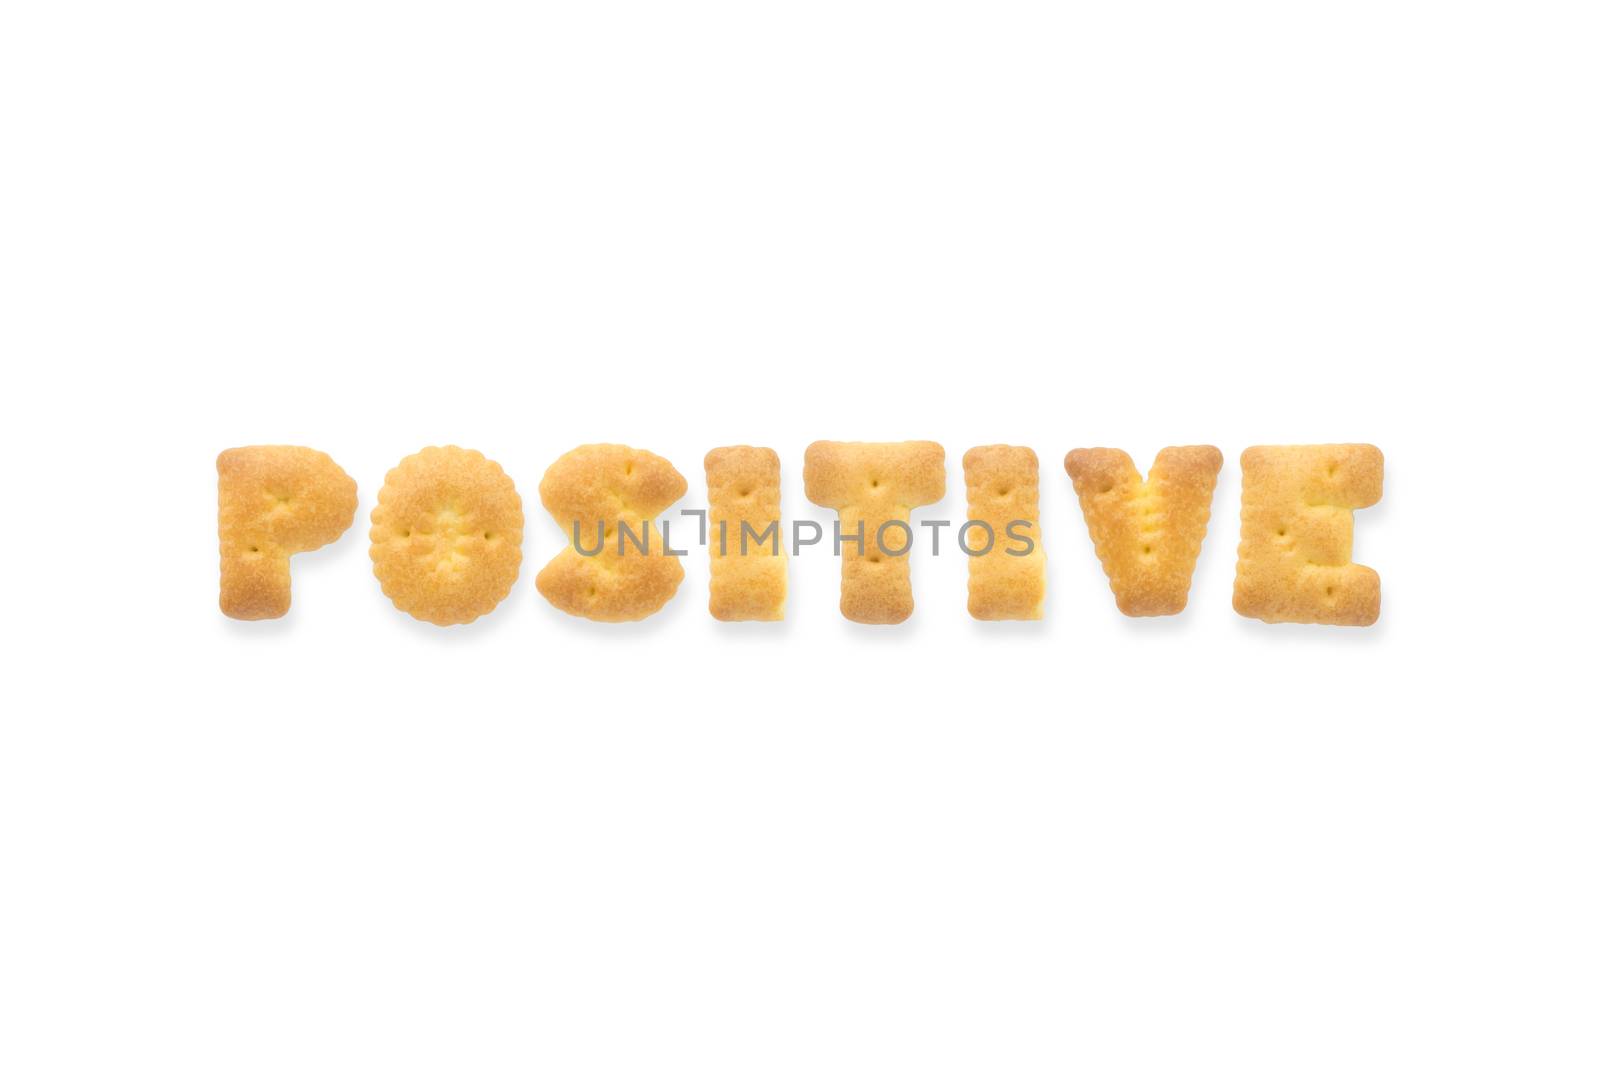 The Letter Word POSITIVE Alphabet Biscuit Cracker by vinnstock